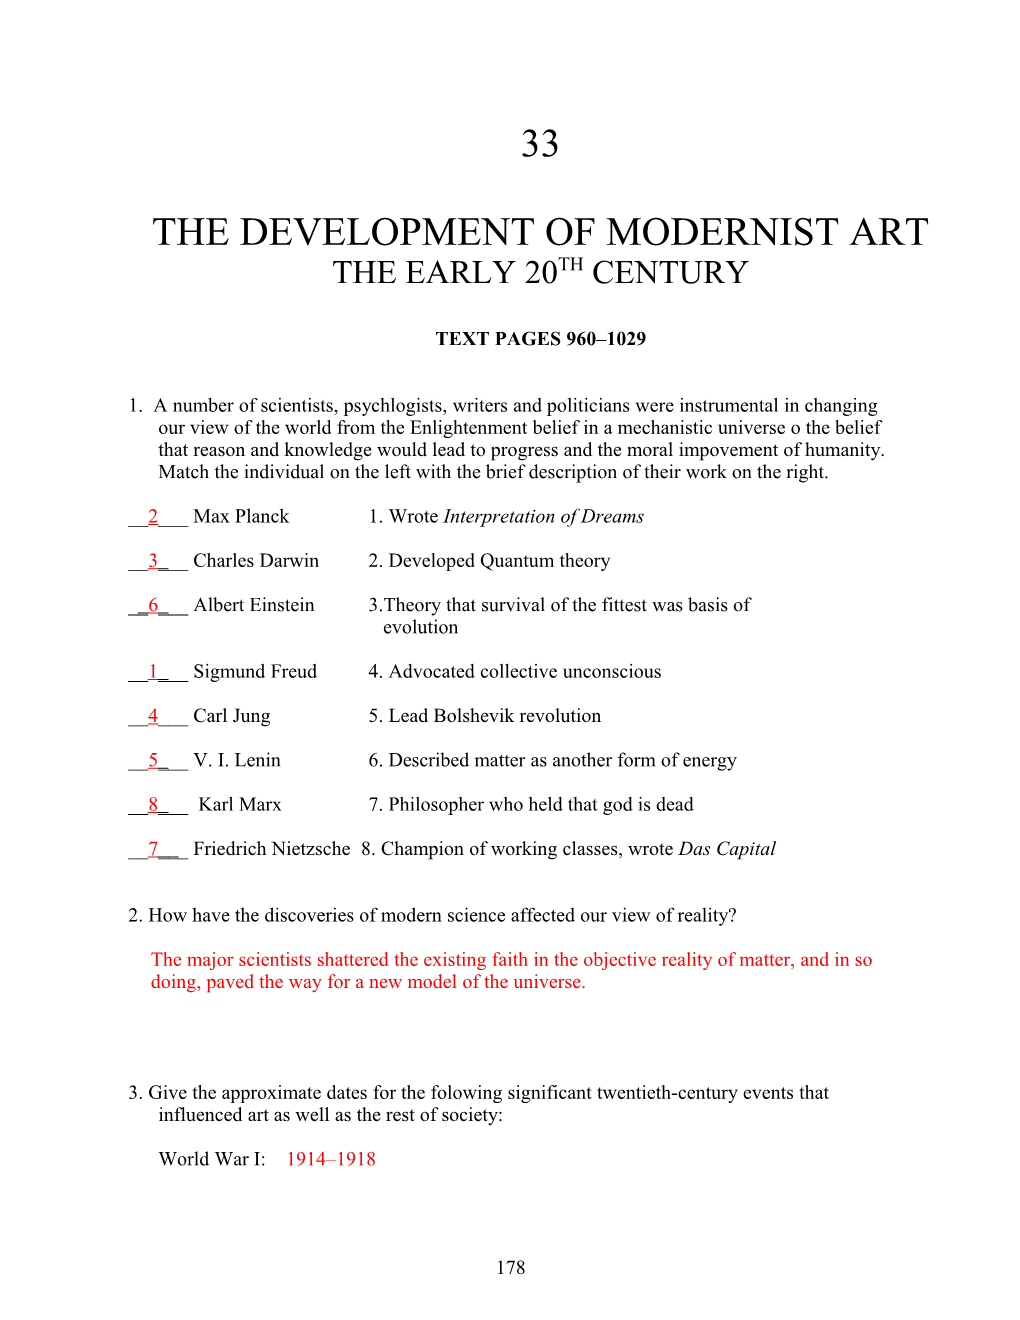 The Development of Modernist Art